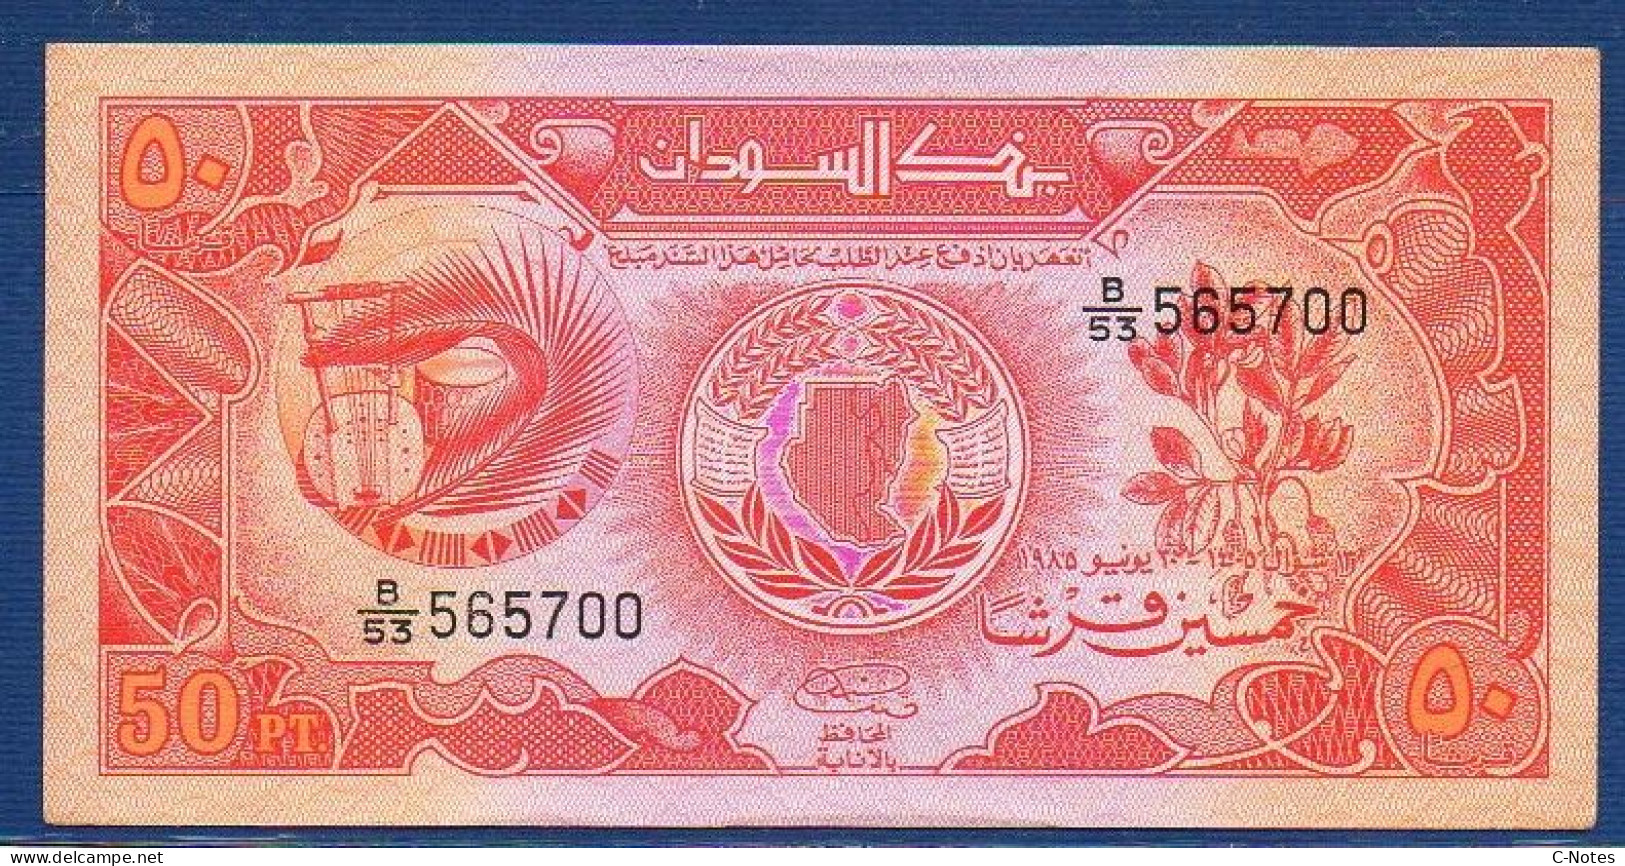 SUDAN - P.31 – 50 Piastres 1985 AUNC, S/n B/53 565700 - Soudan